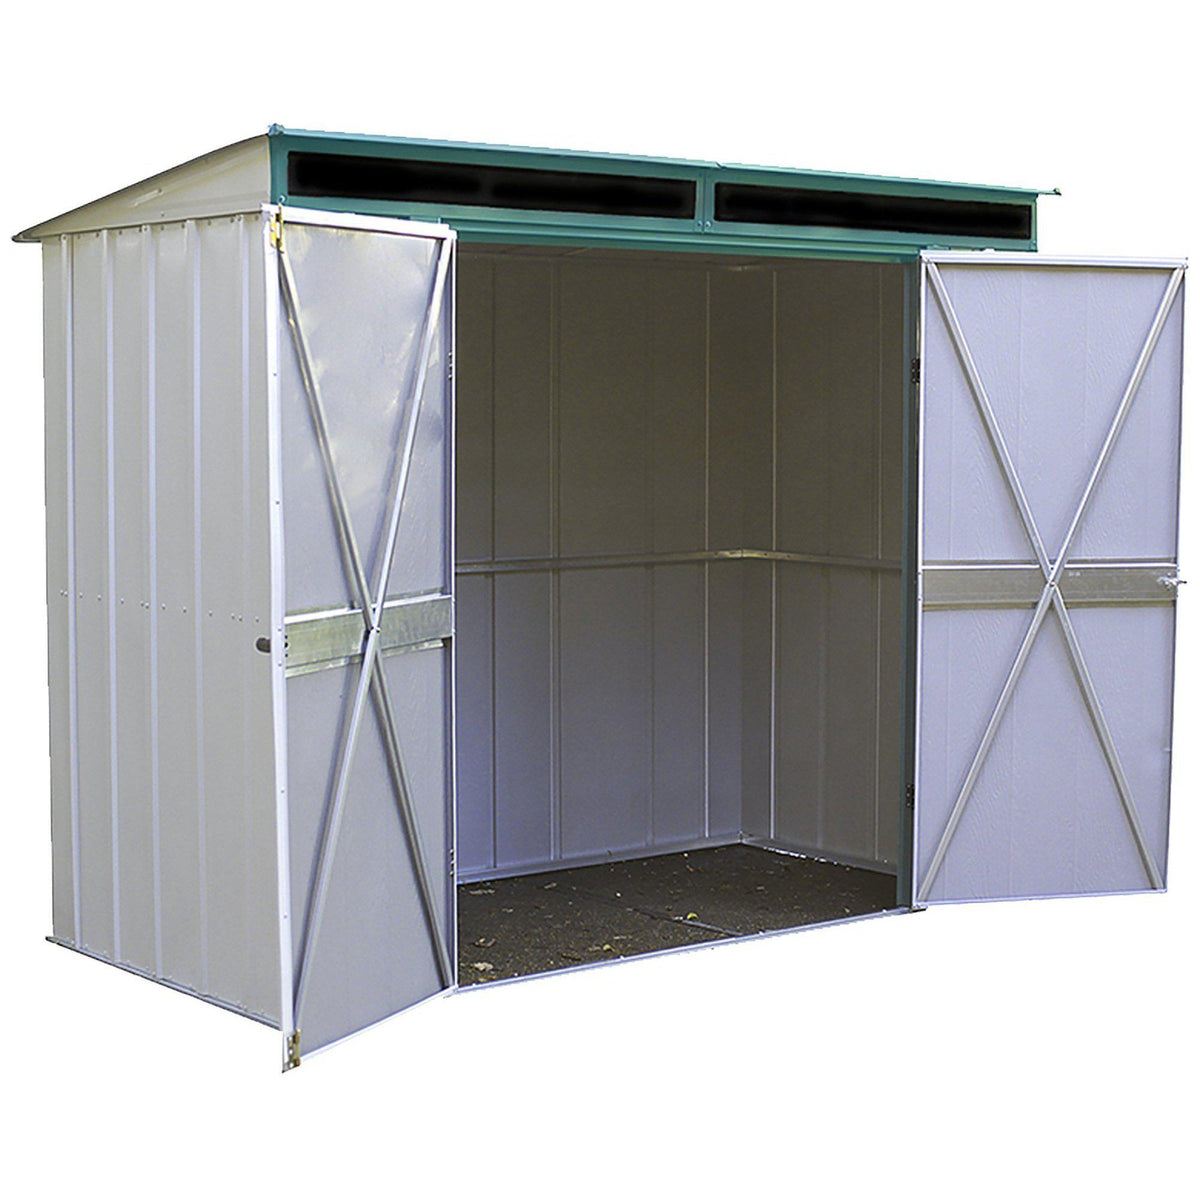 Arrow Euro-Lite Steel Storage Pent Shed, Green/Eggshell, 8 x 4 ft.